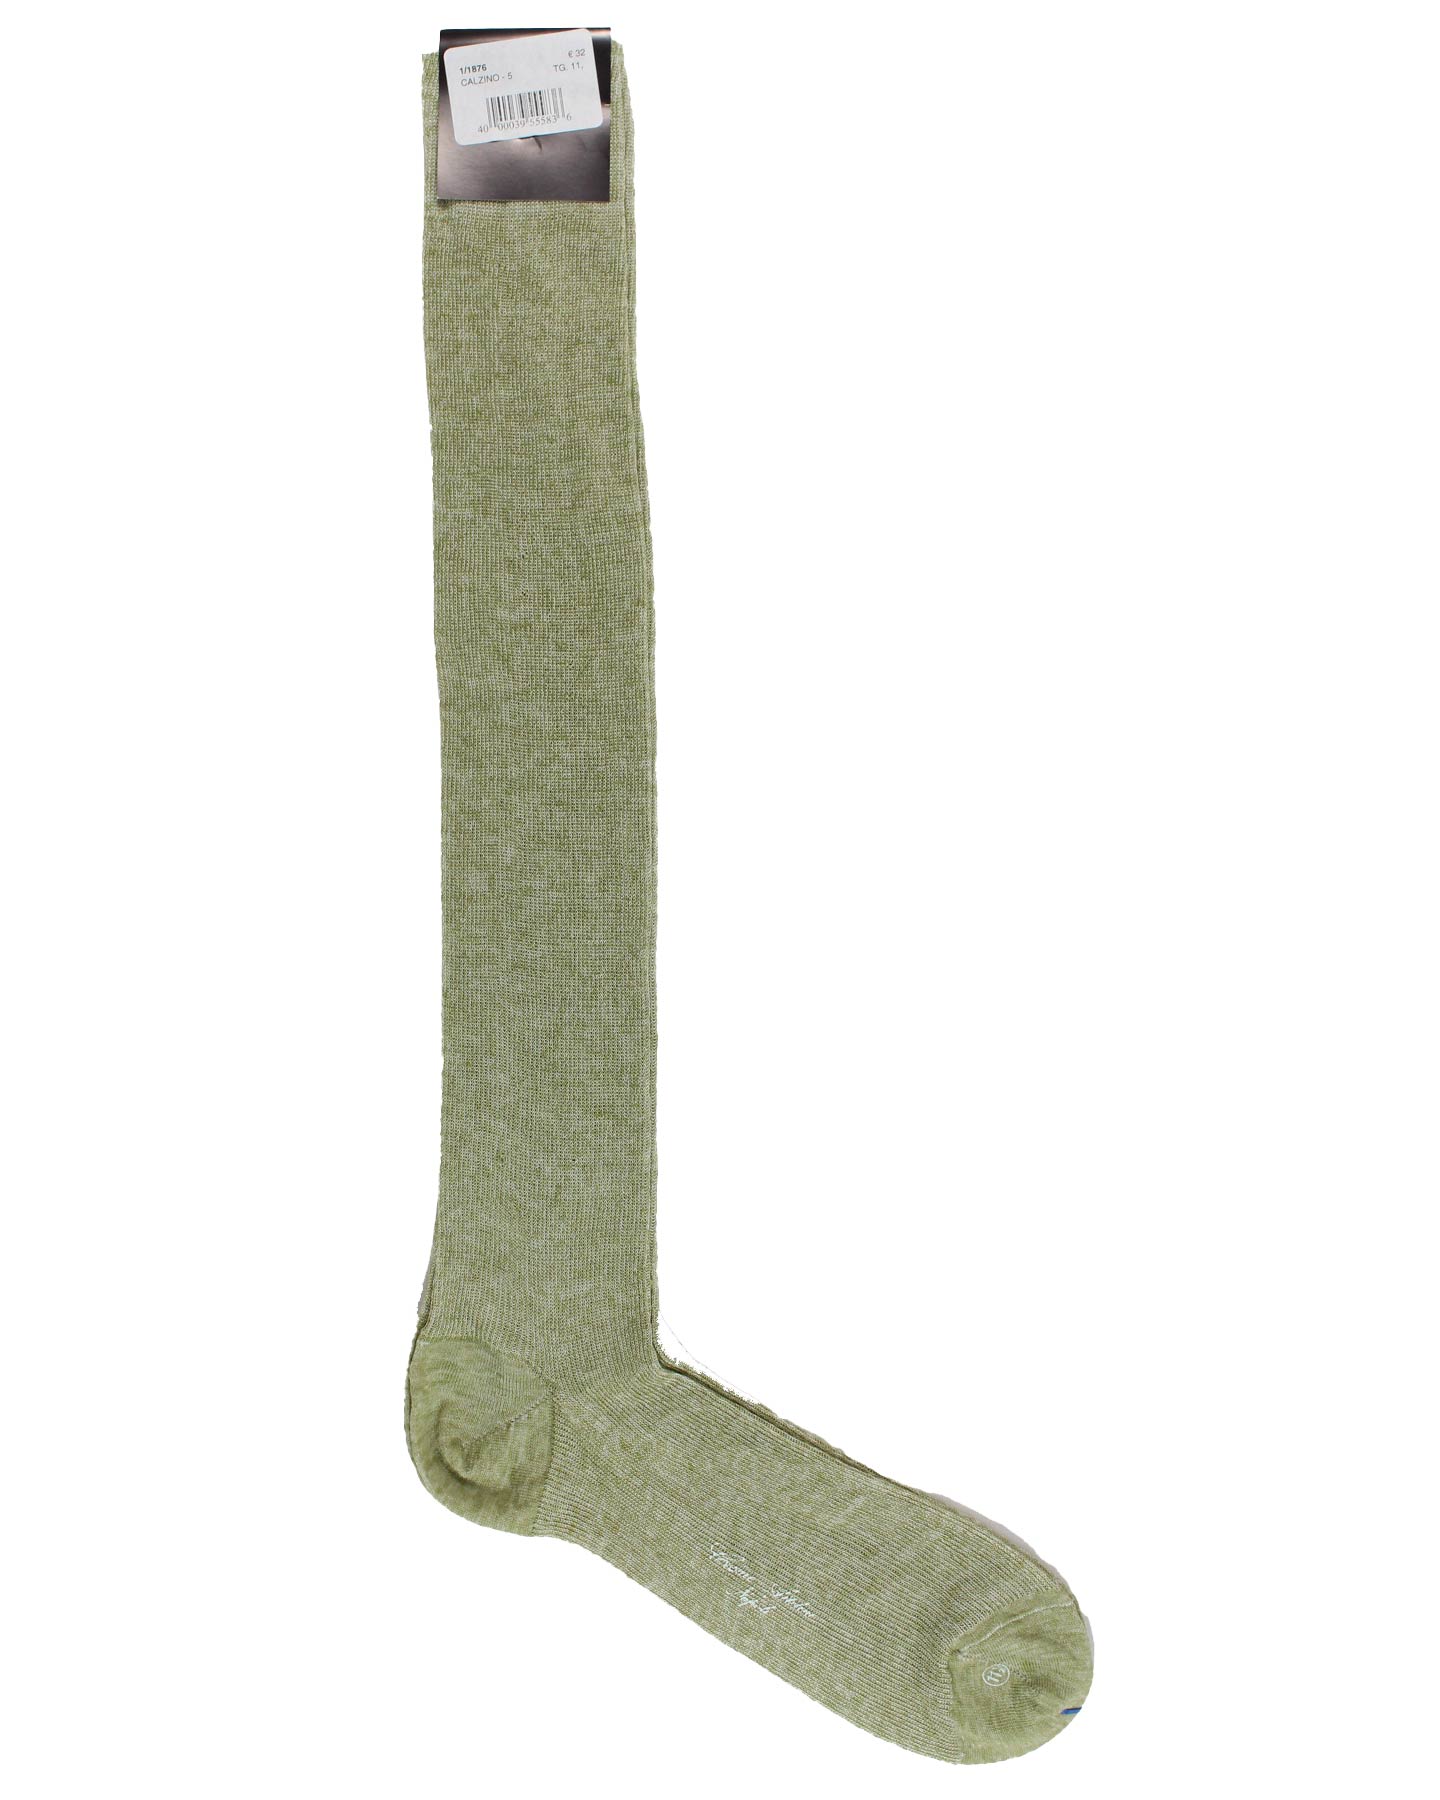 Cesare Attolini Light Green Over The Calf Socks Linen Cotton US 11 - EUR 44 SALE